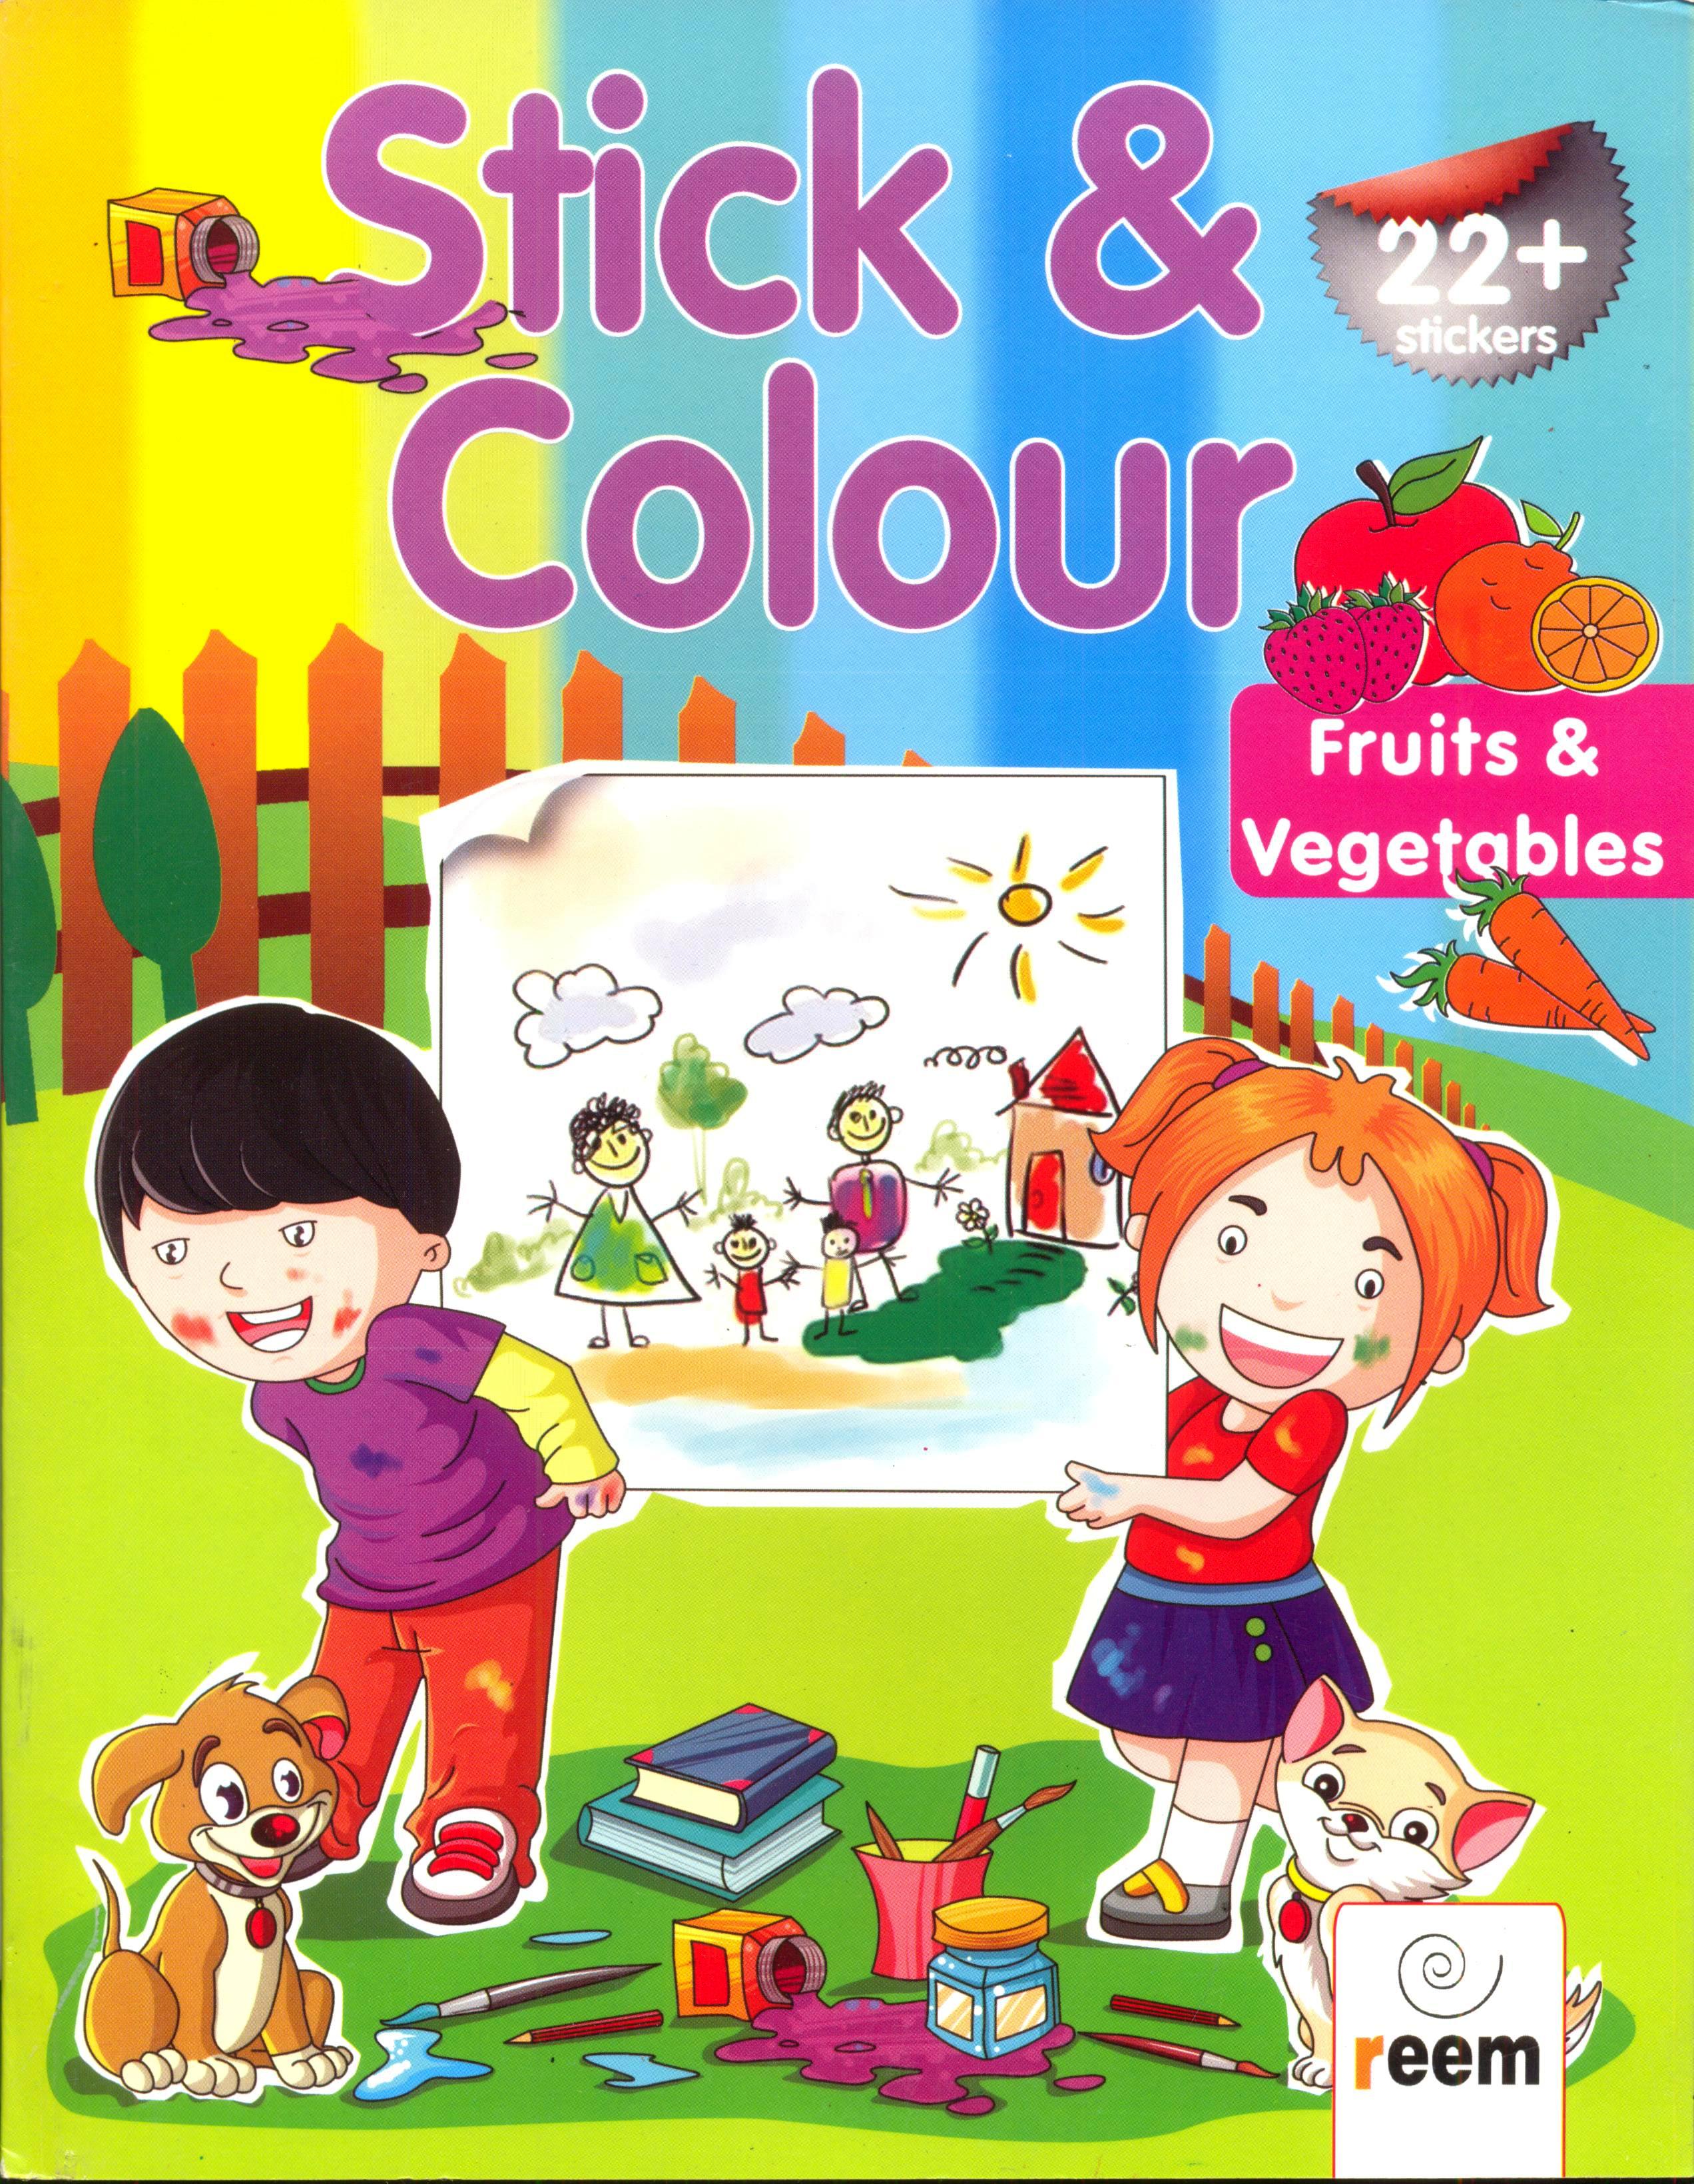 Stick N Colour (Fruits & Vegetables)